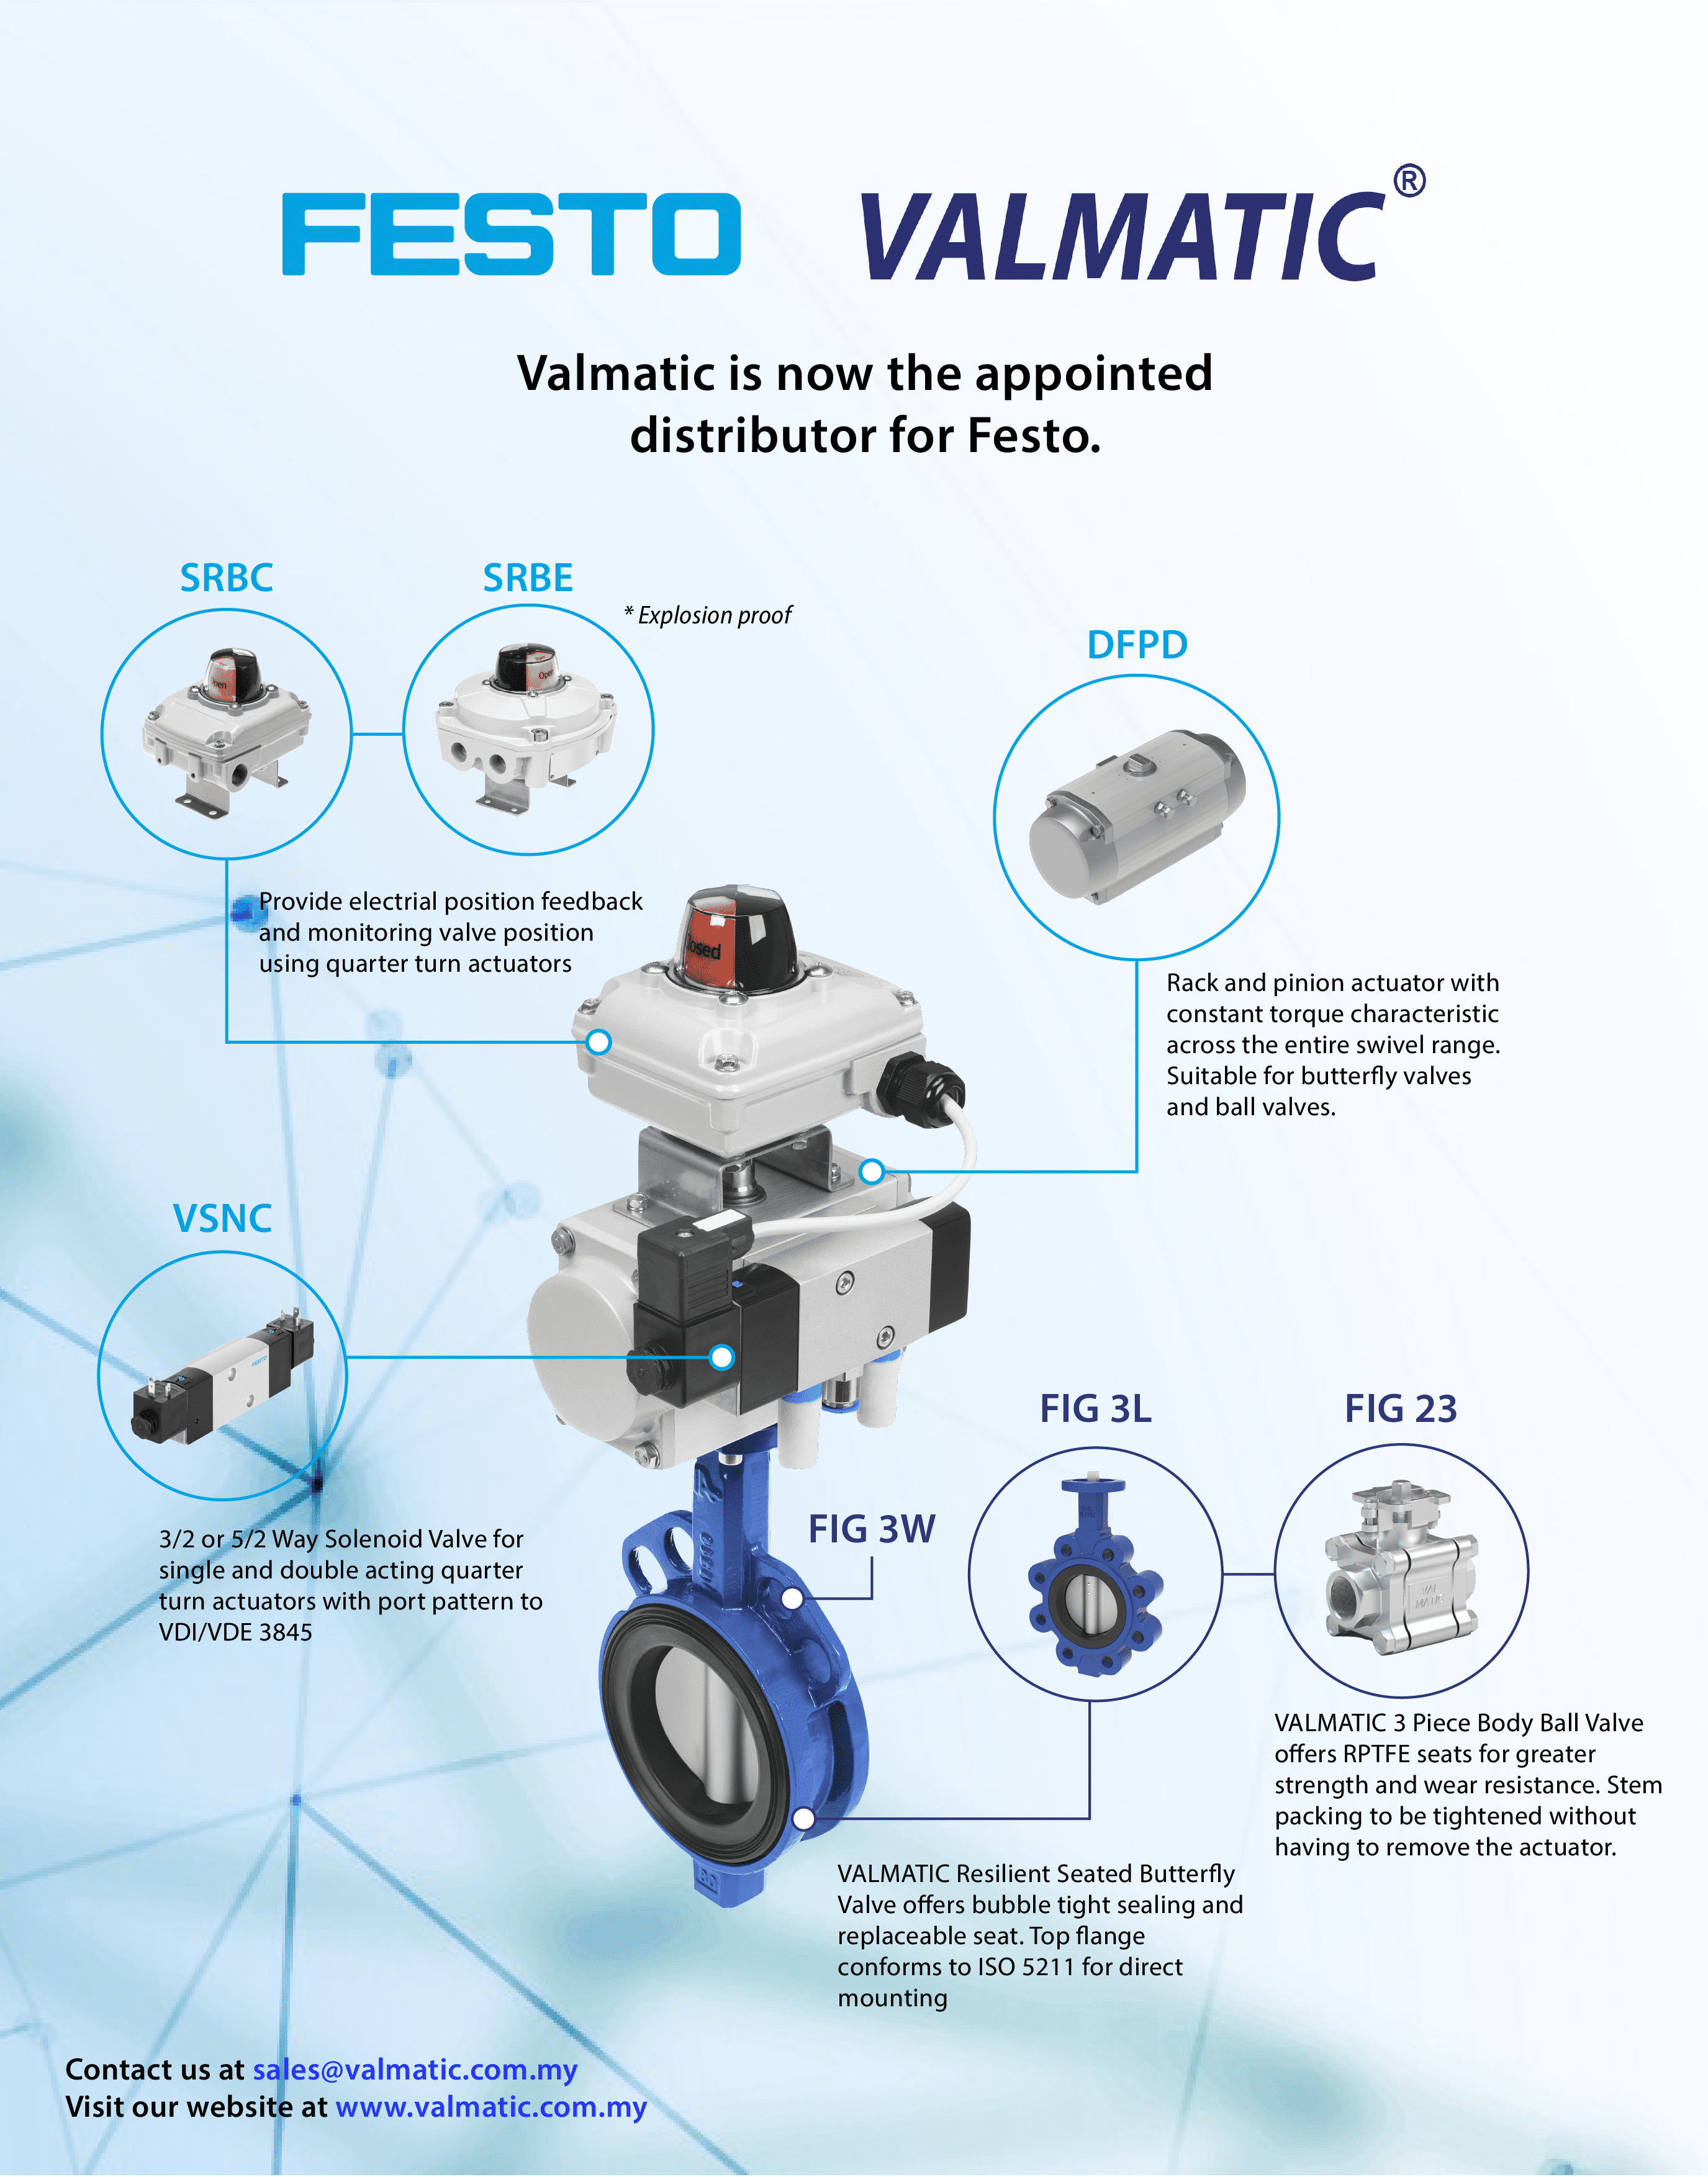 Festo Valmatic Product Offering